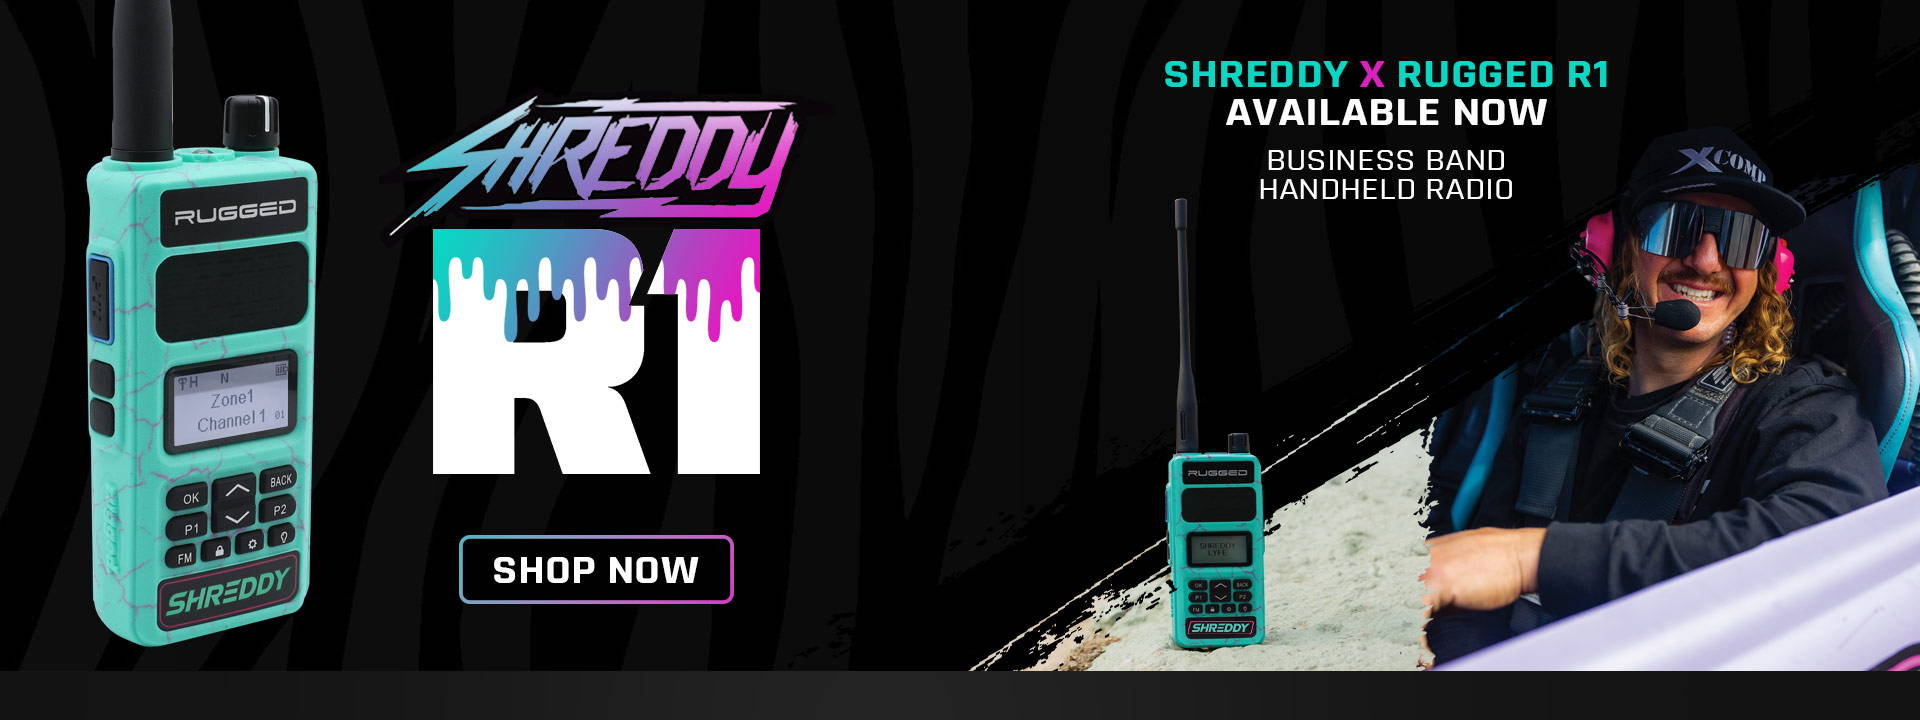 SHREDDY R1 Business Band Handheld Radio